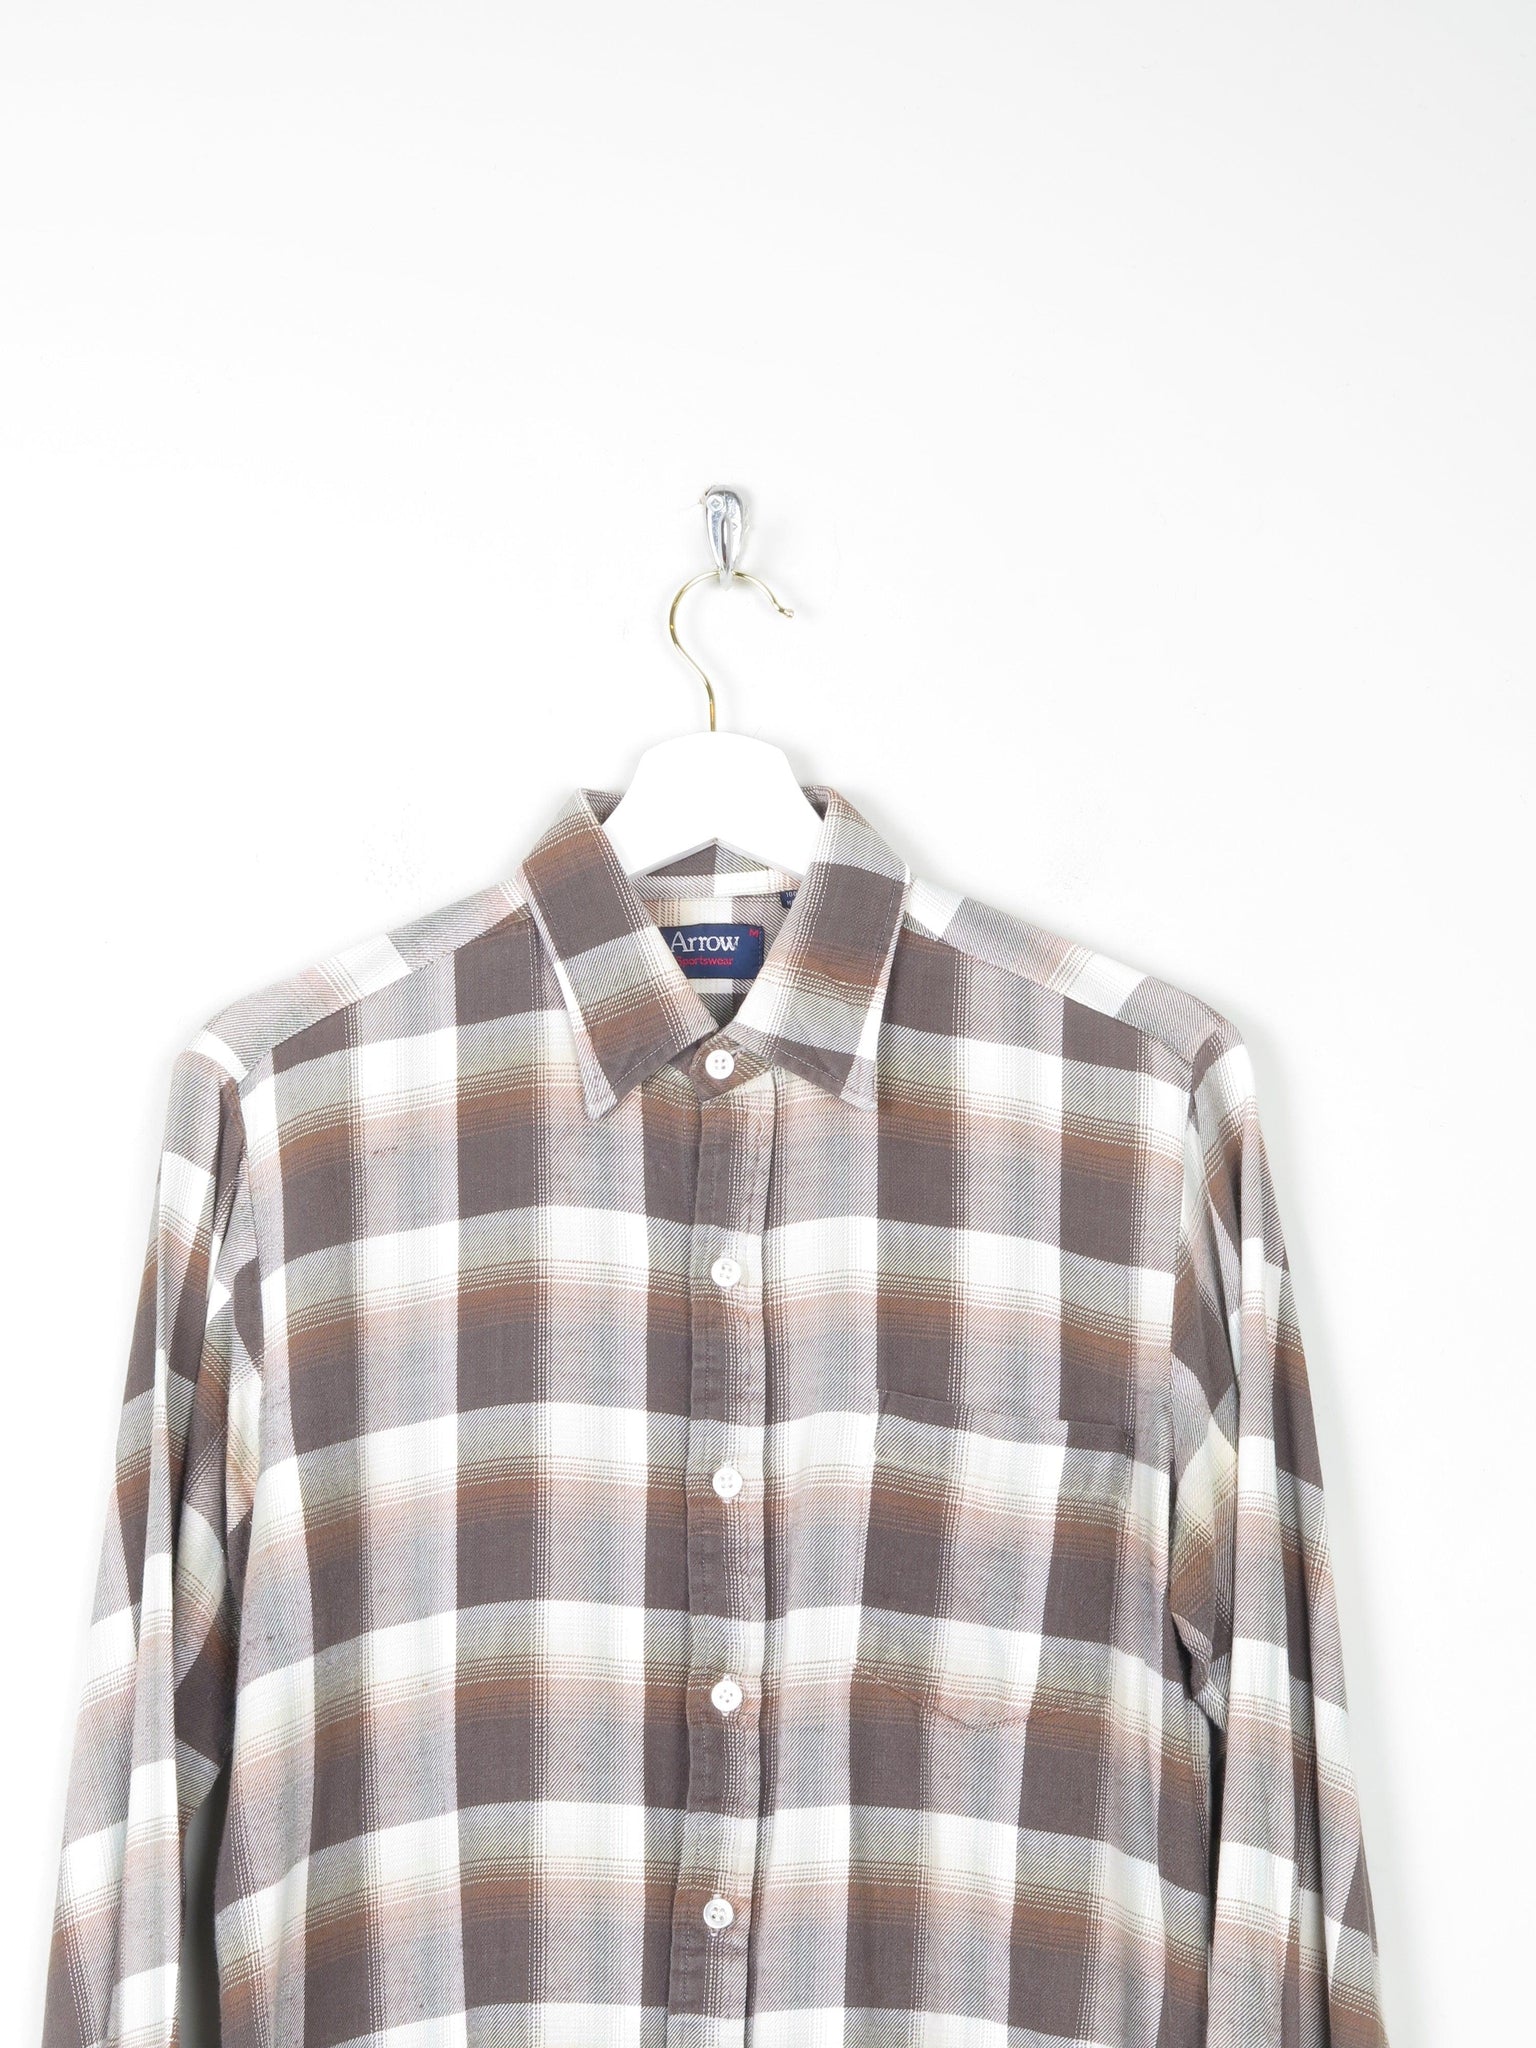 Men's Brown & Cream Vintage Flannel Shirt S - The Harlequin